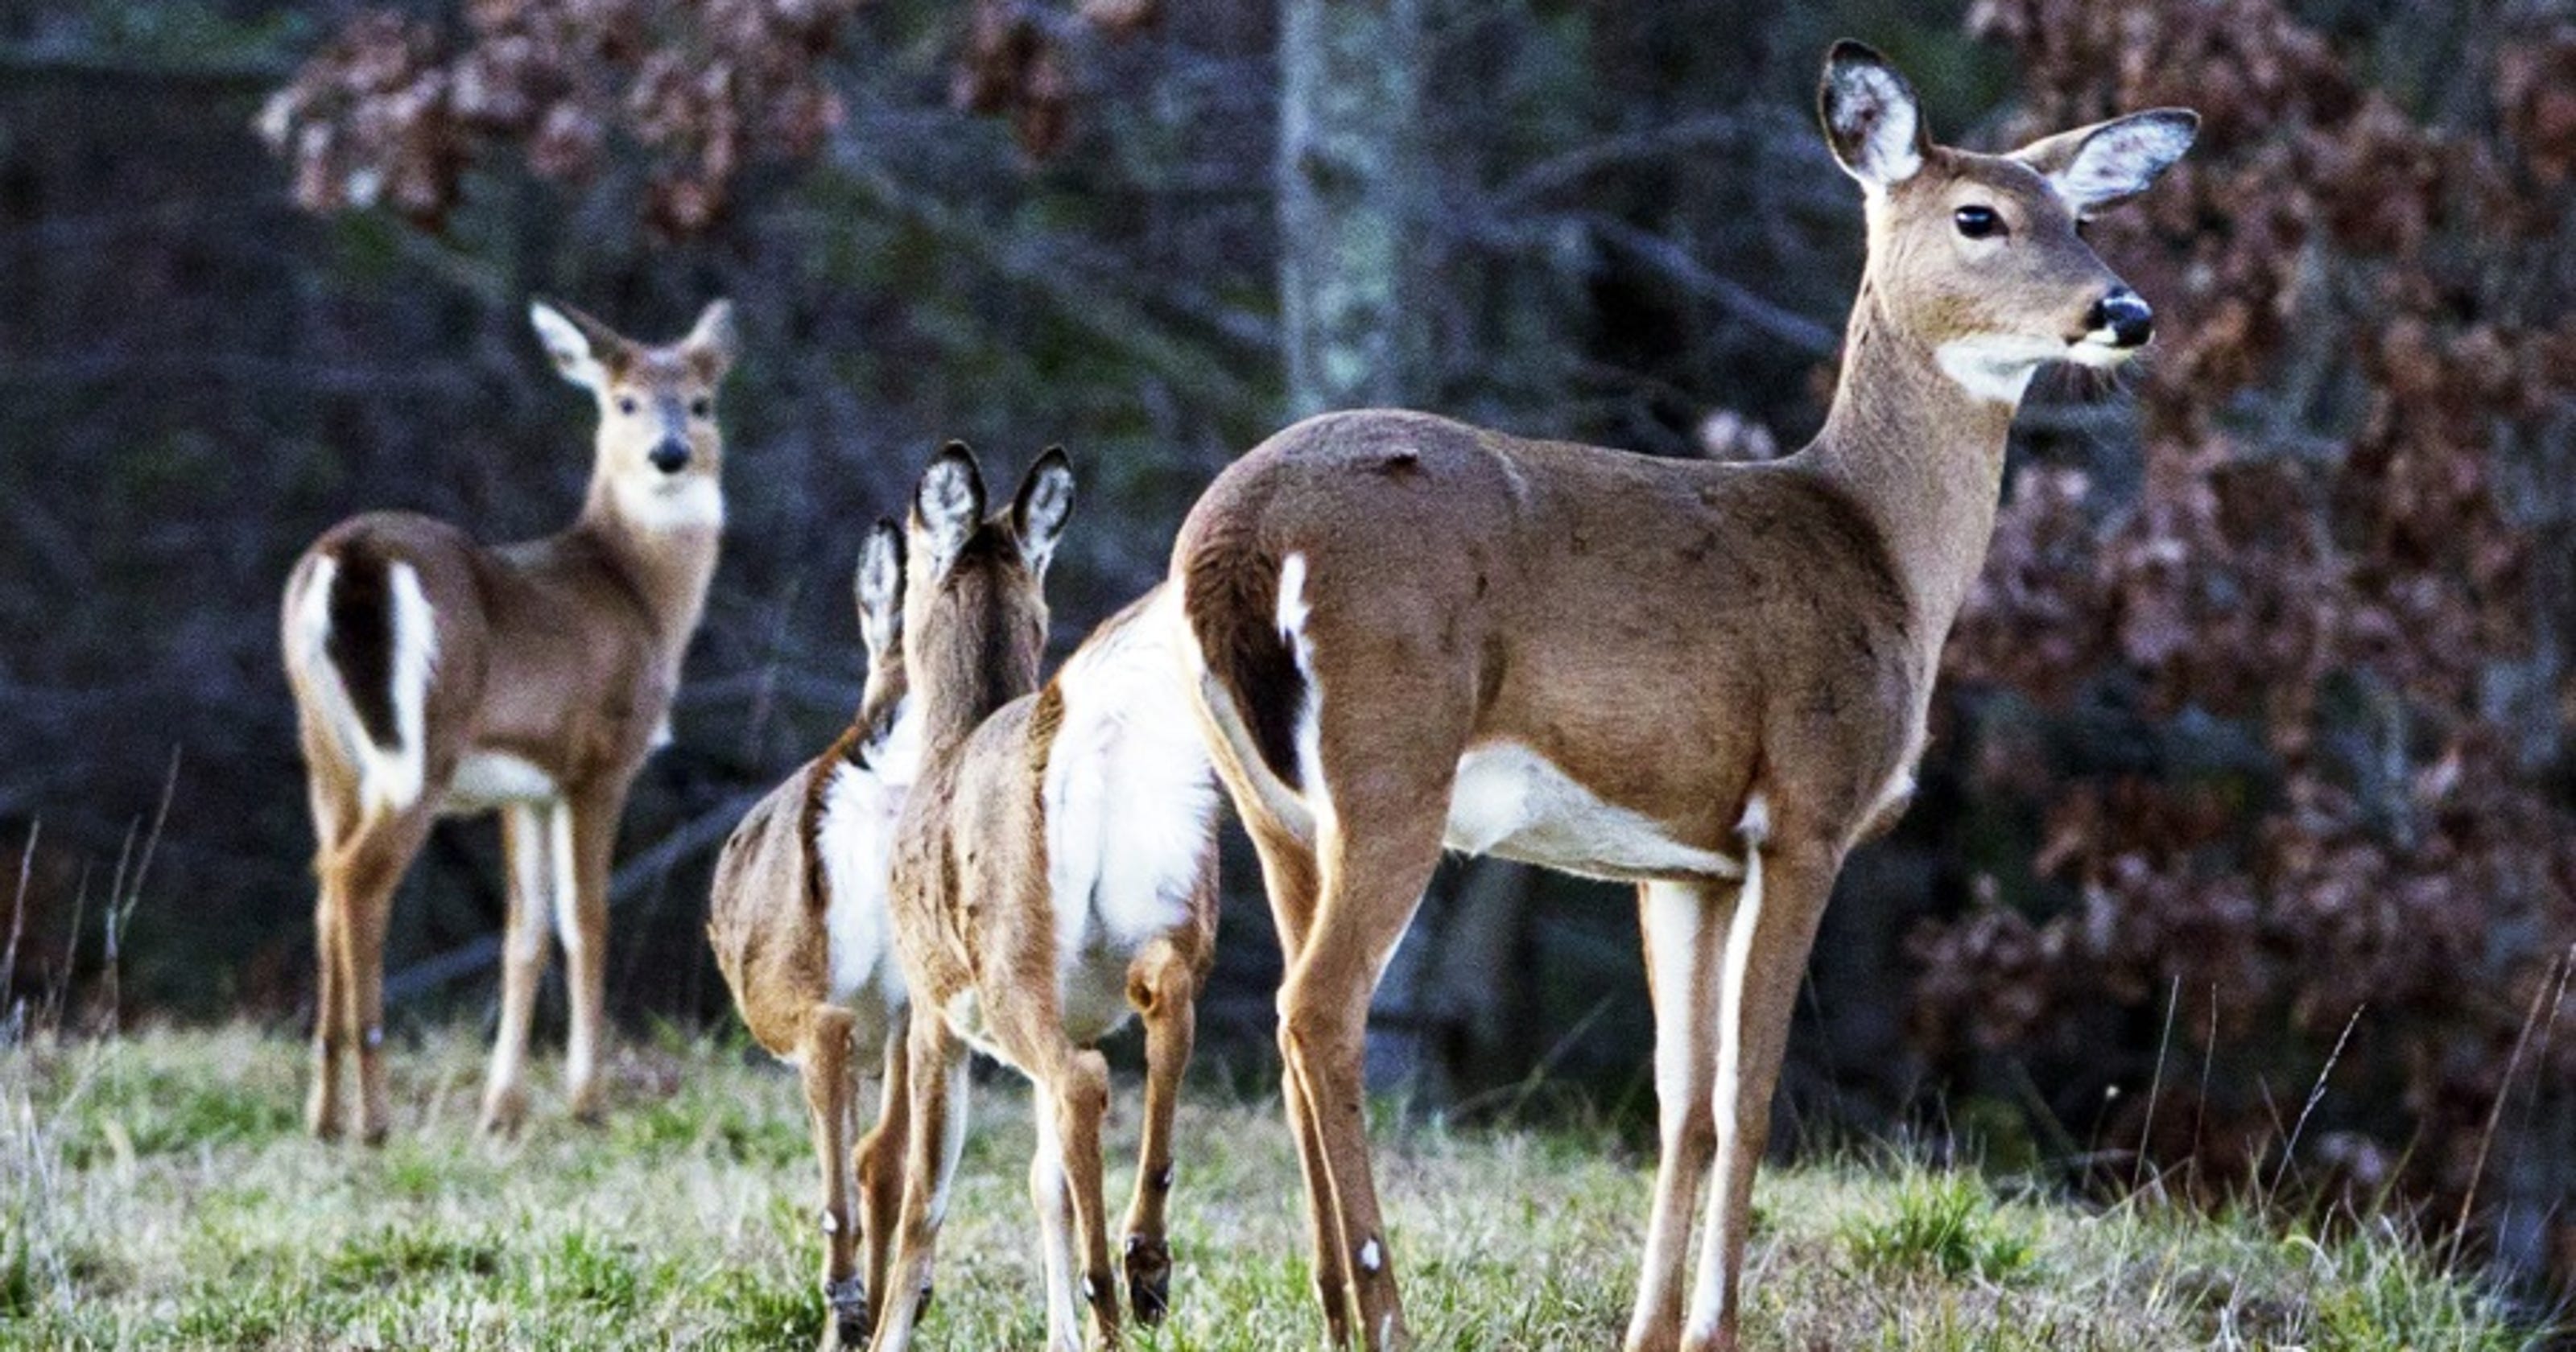 NC hits recordhigh deer hunting season